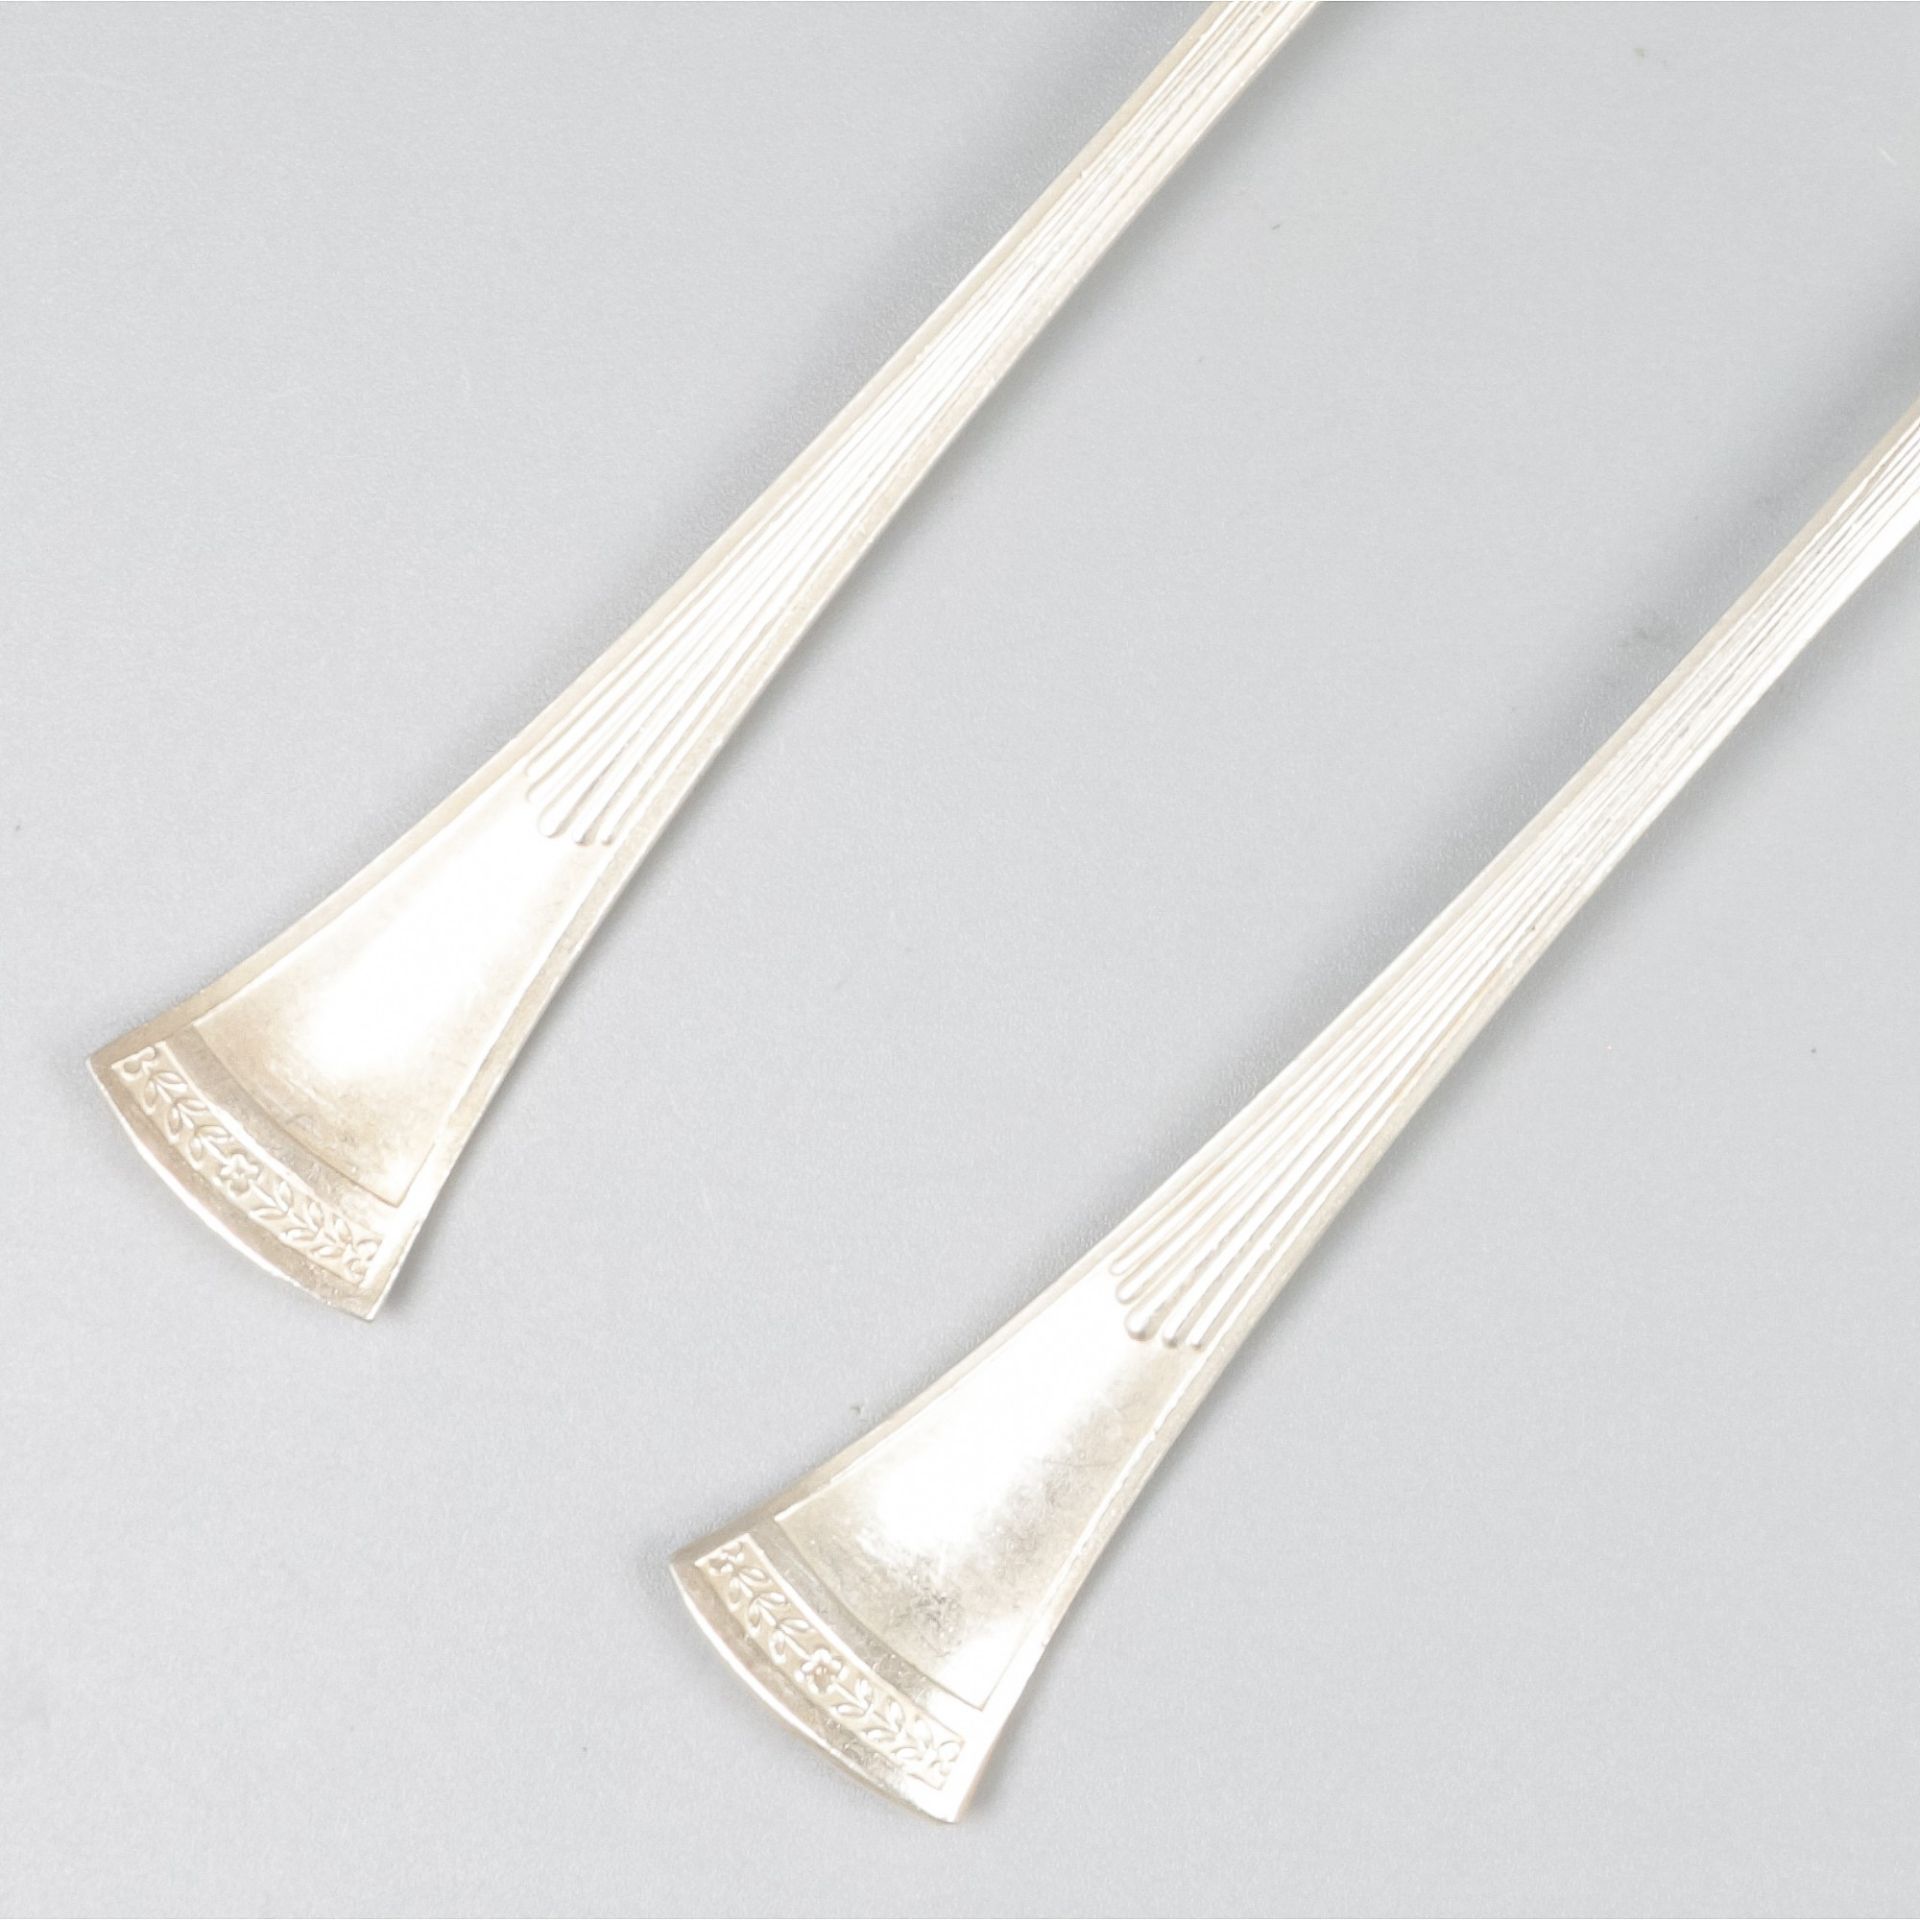 12-piece fish cutlery, silver. - Image 5 of 6